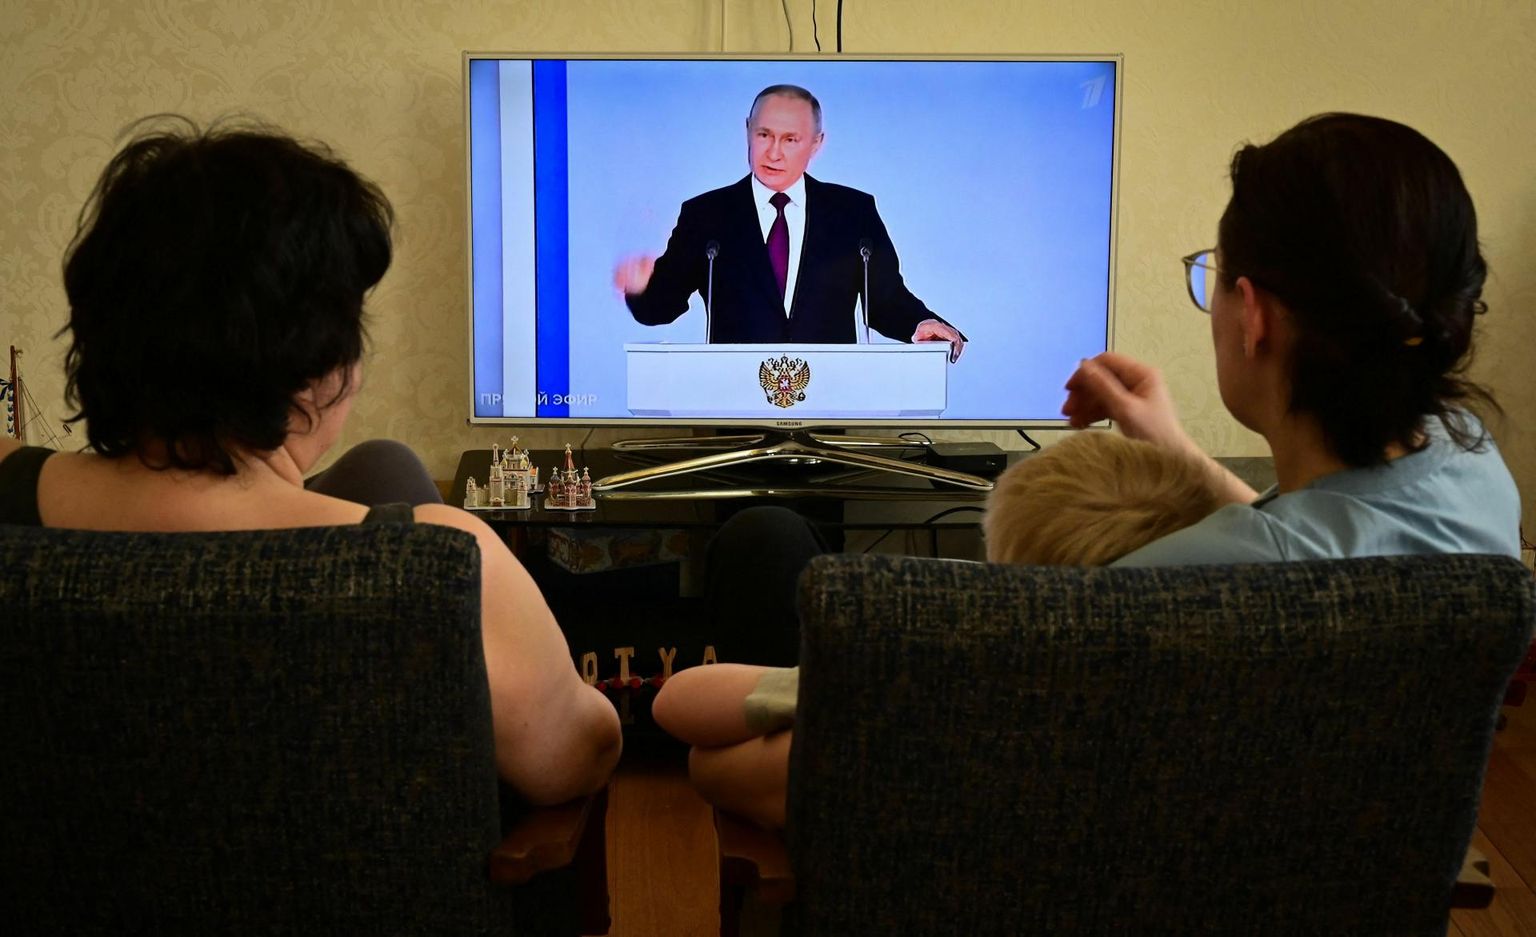 Venemaa president Vladimir Putin teleekraanil.